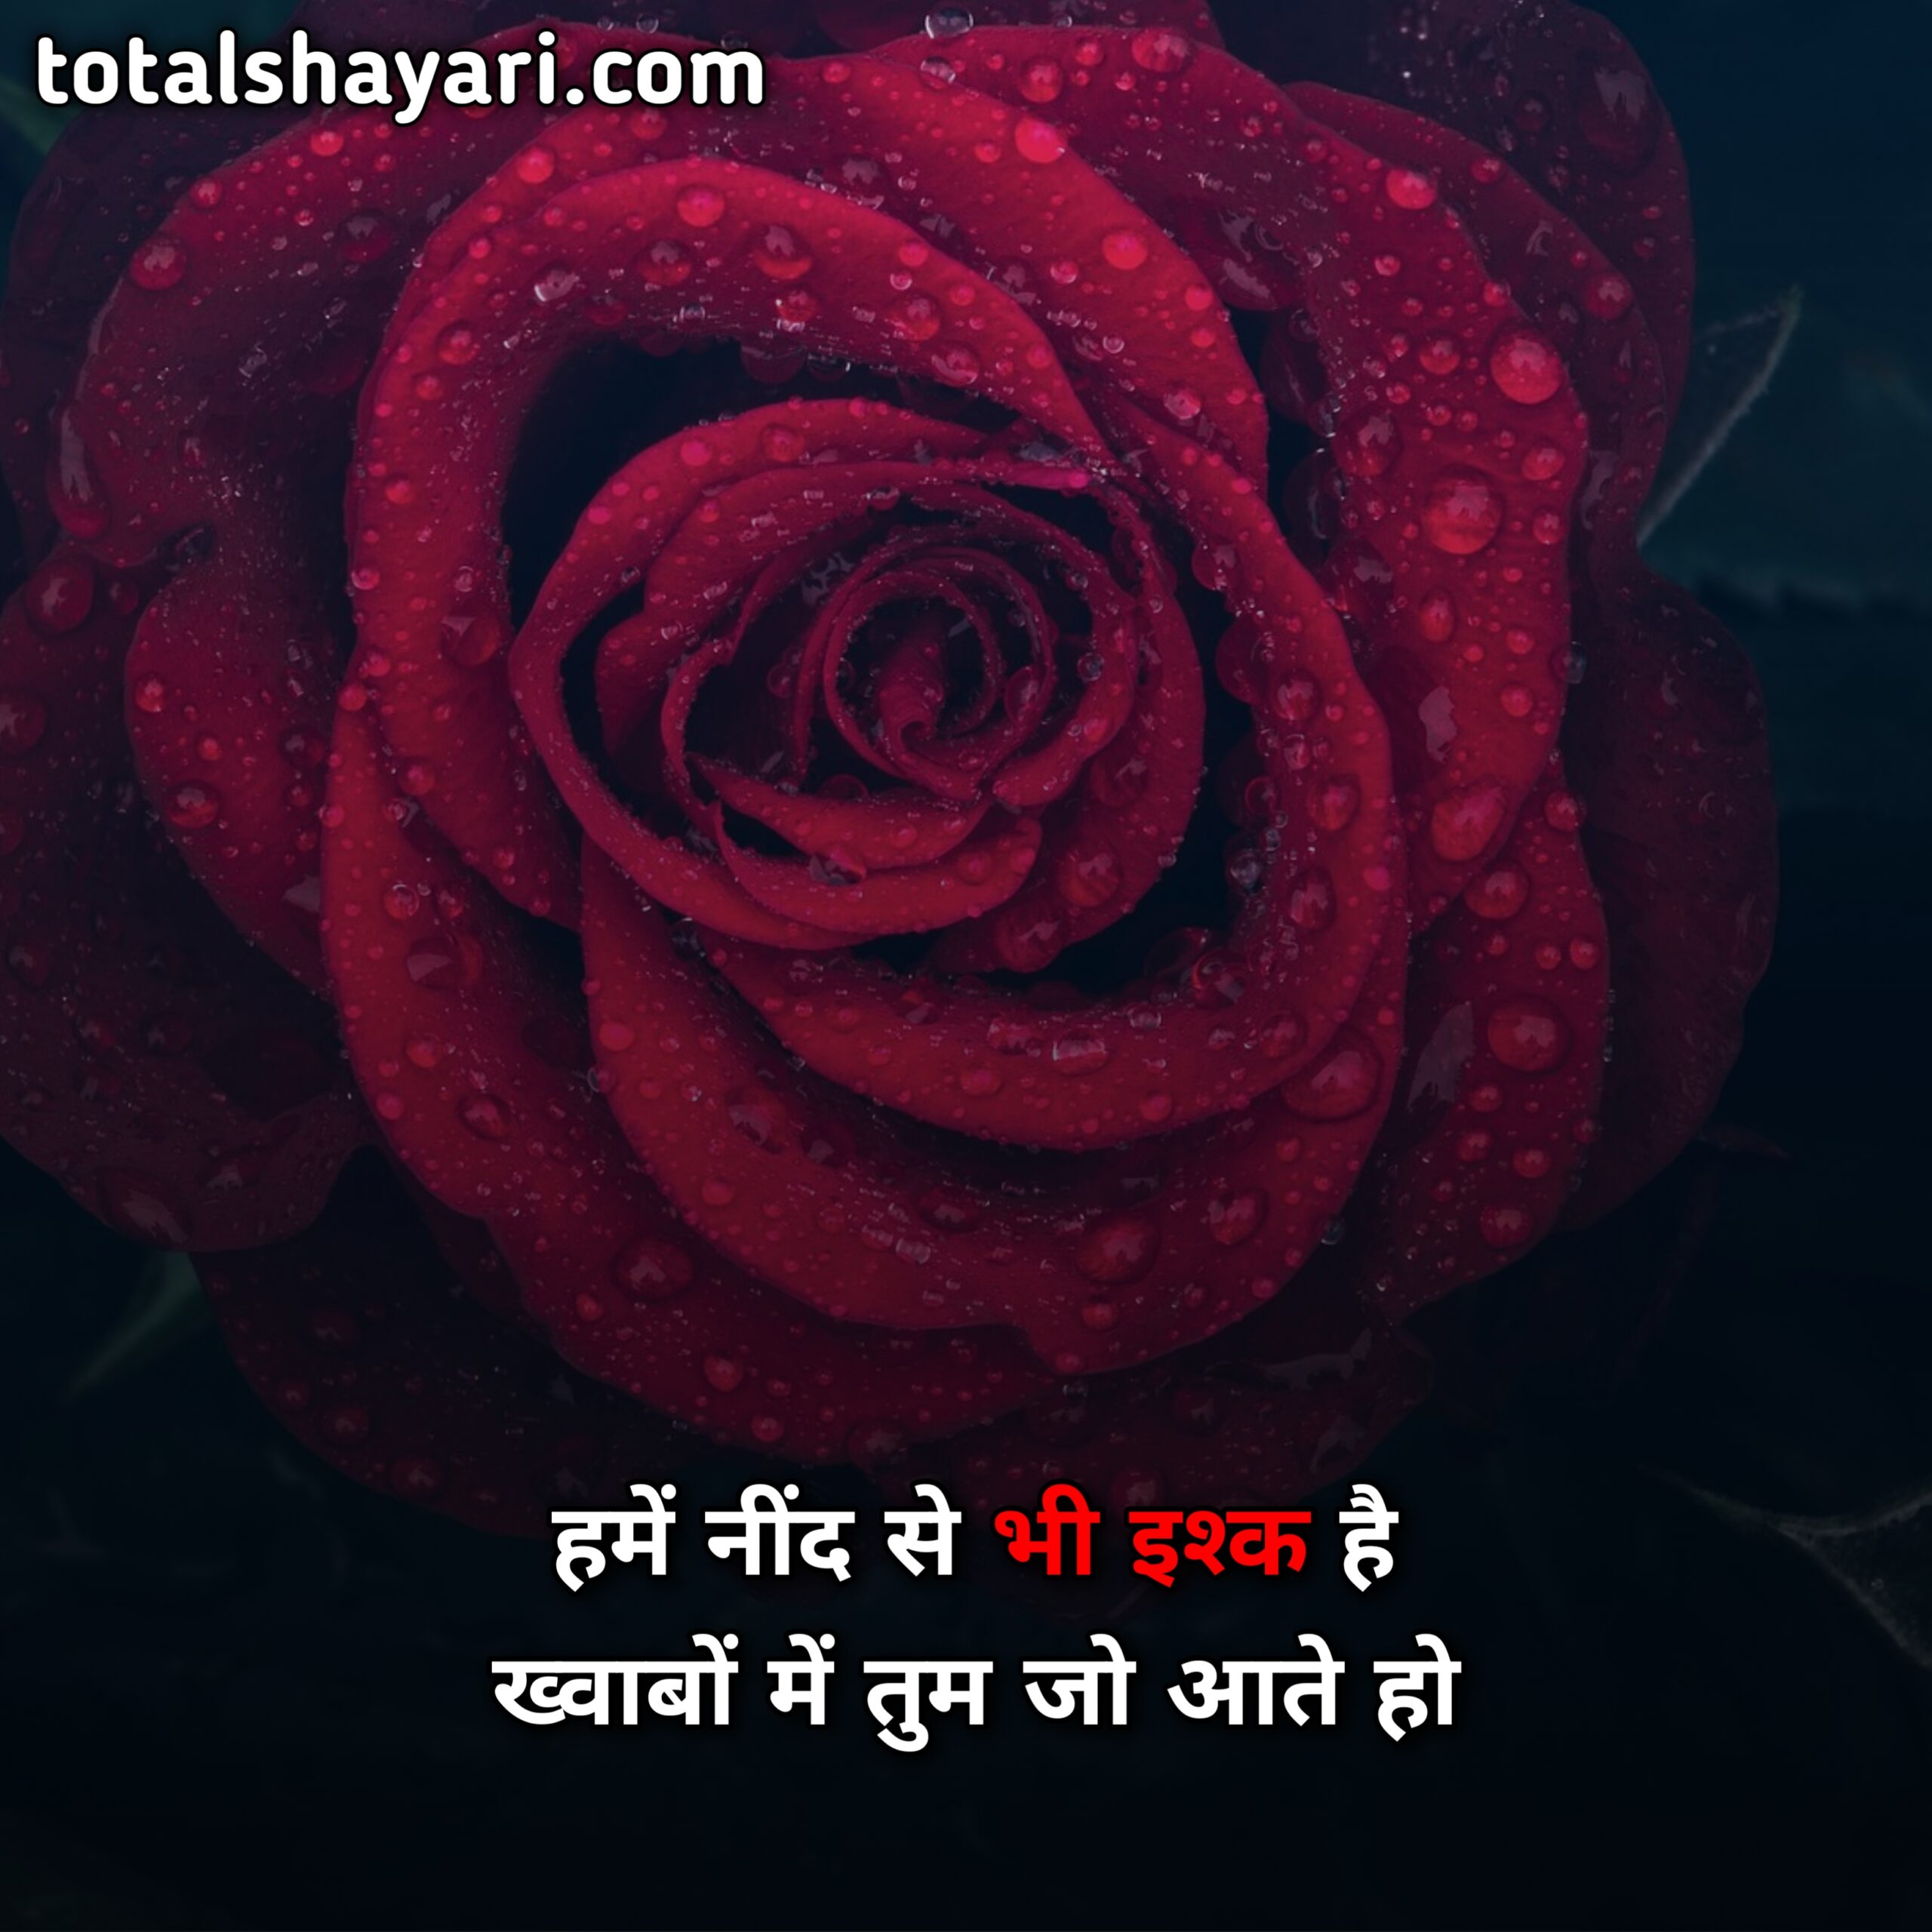 Love Shayari Image 